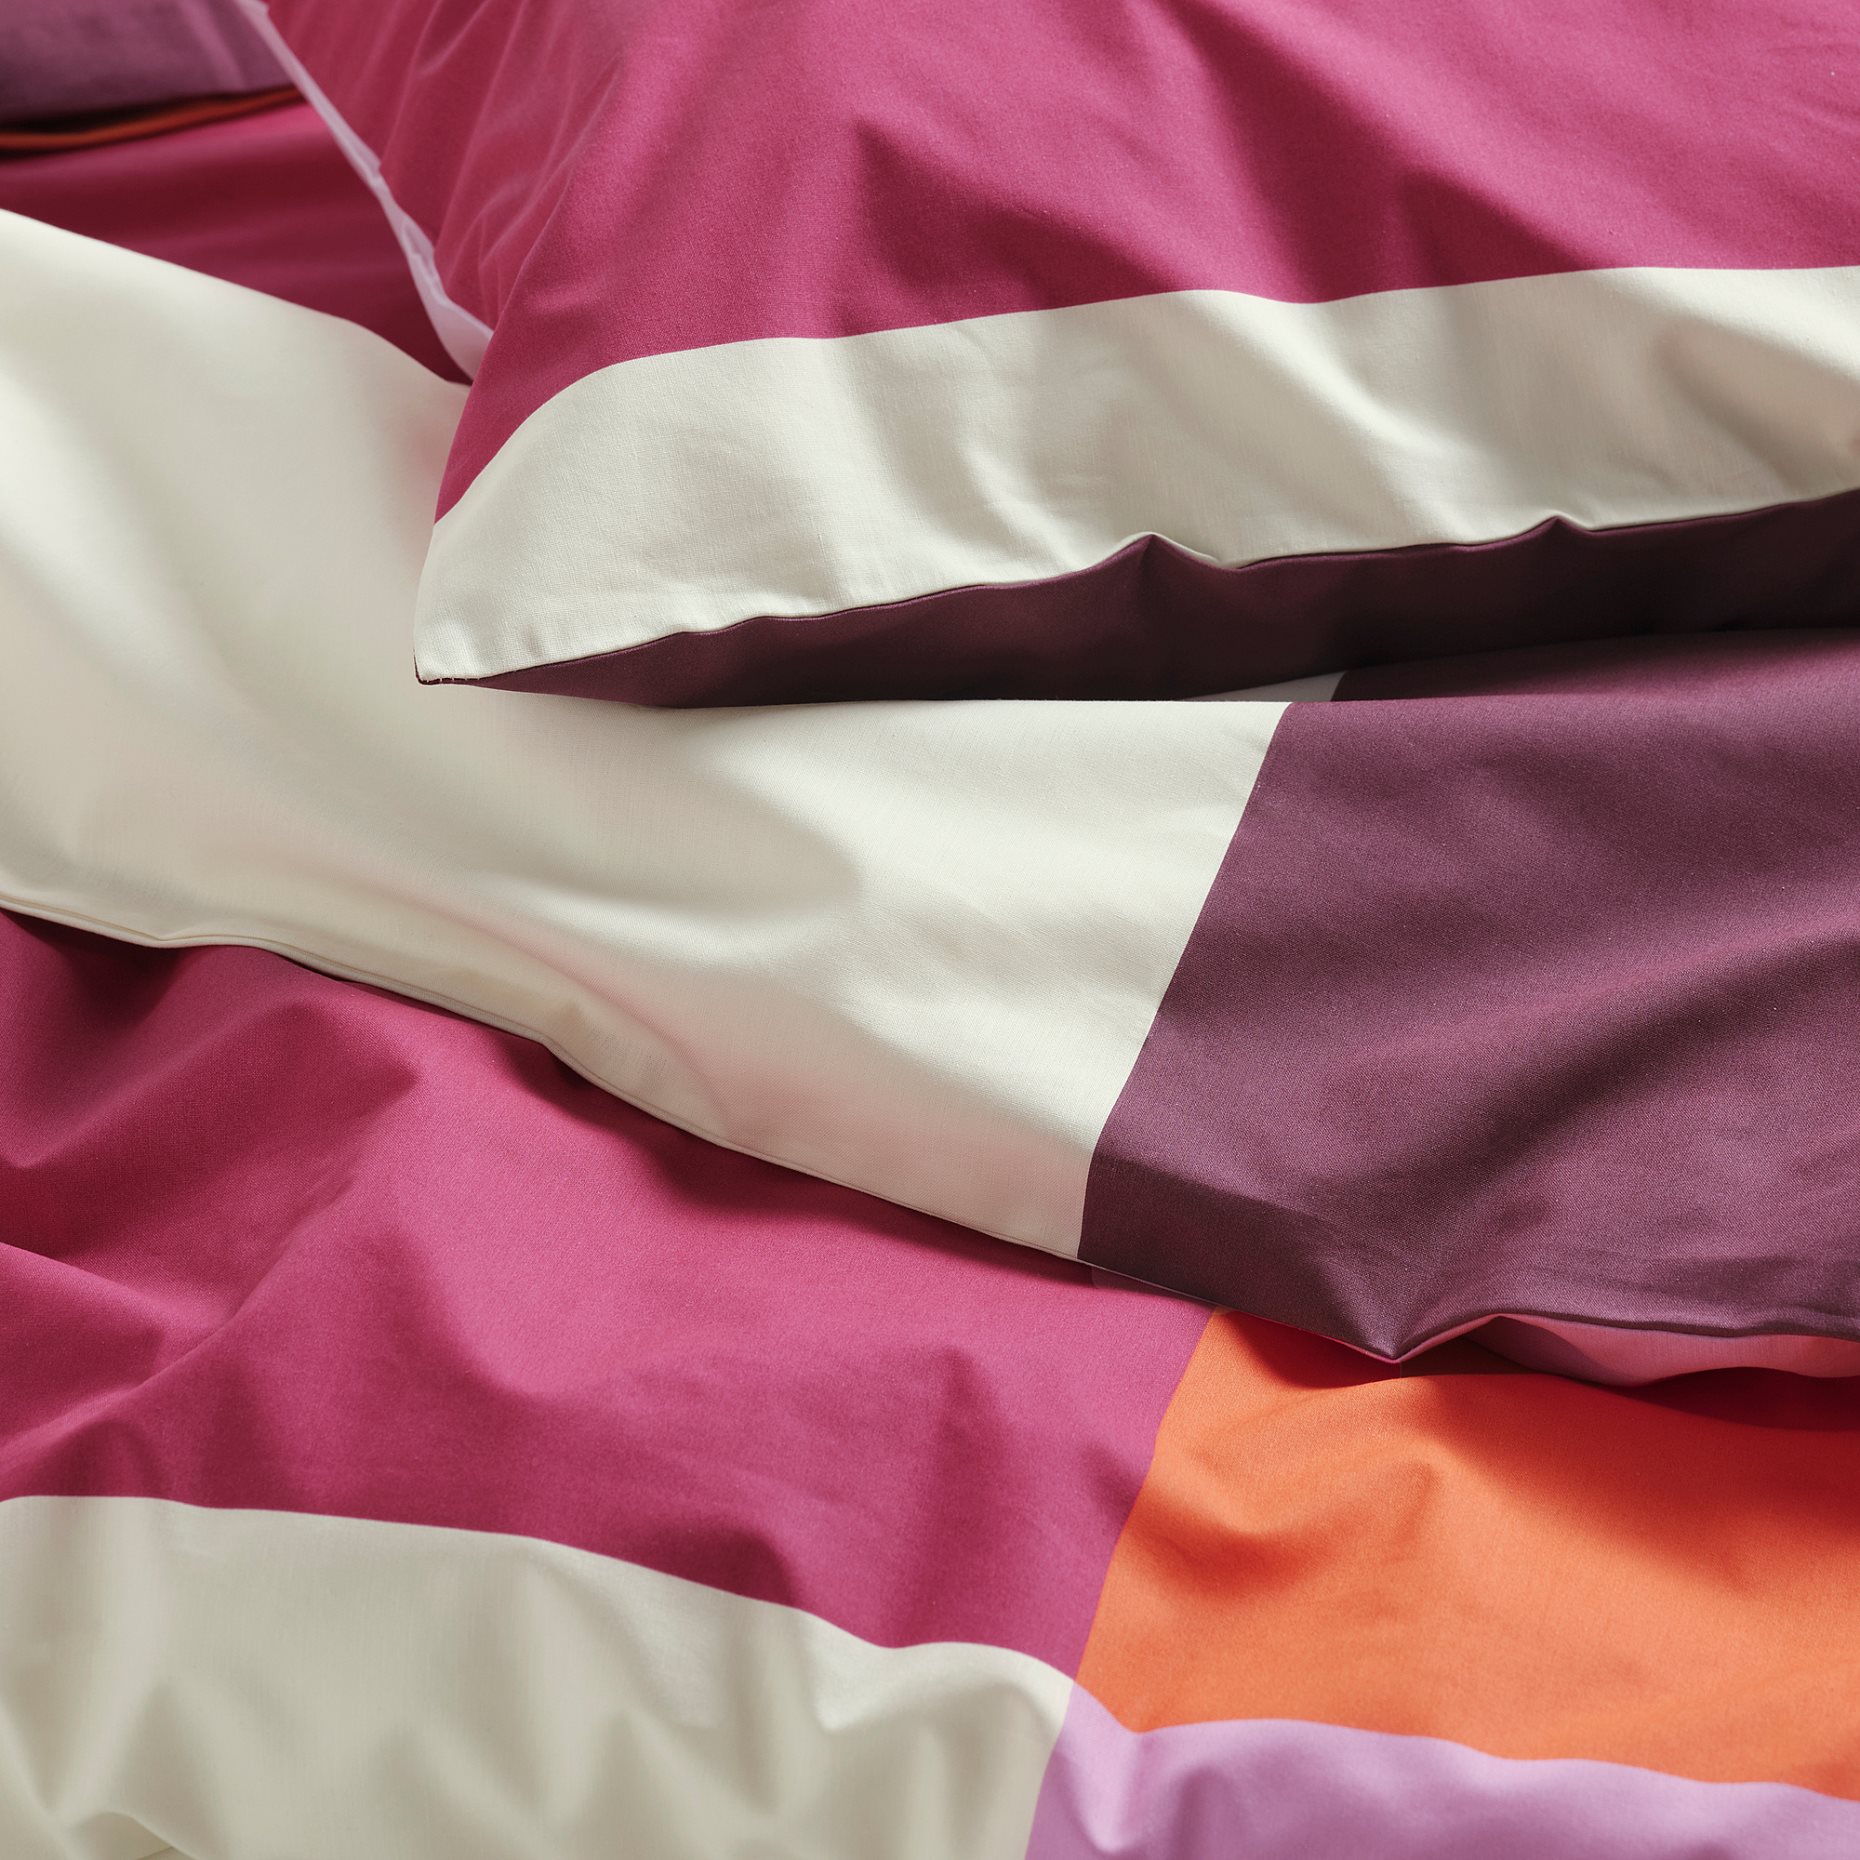 BRUNKRISSLA, duvet cover and 2 pillowcases, 240x220/50x60 cm, 905.582.87